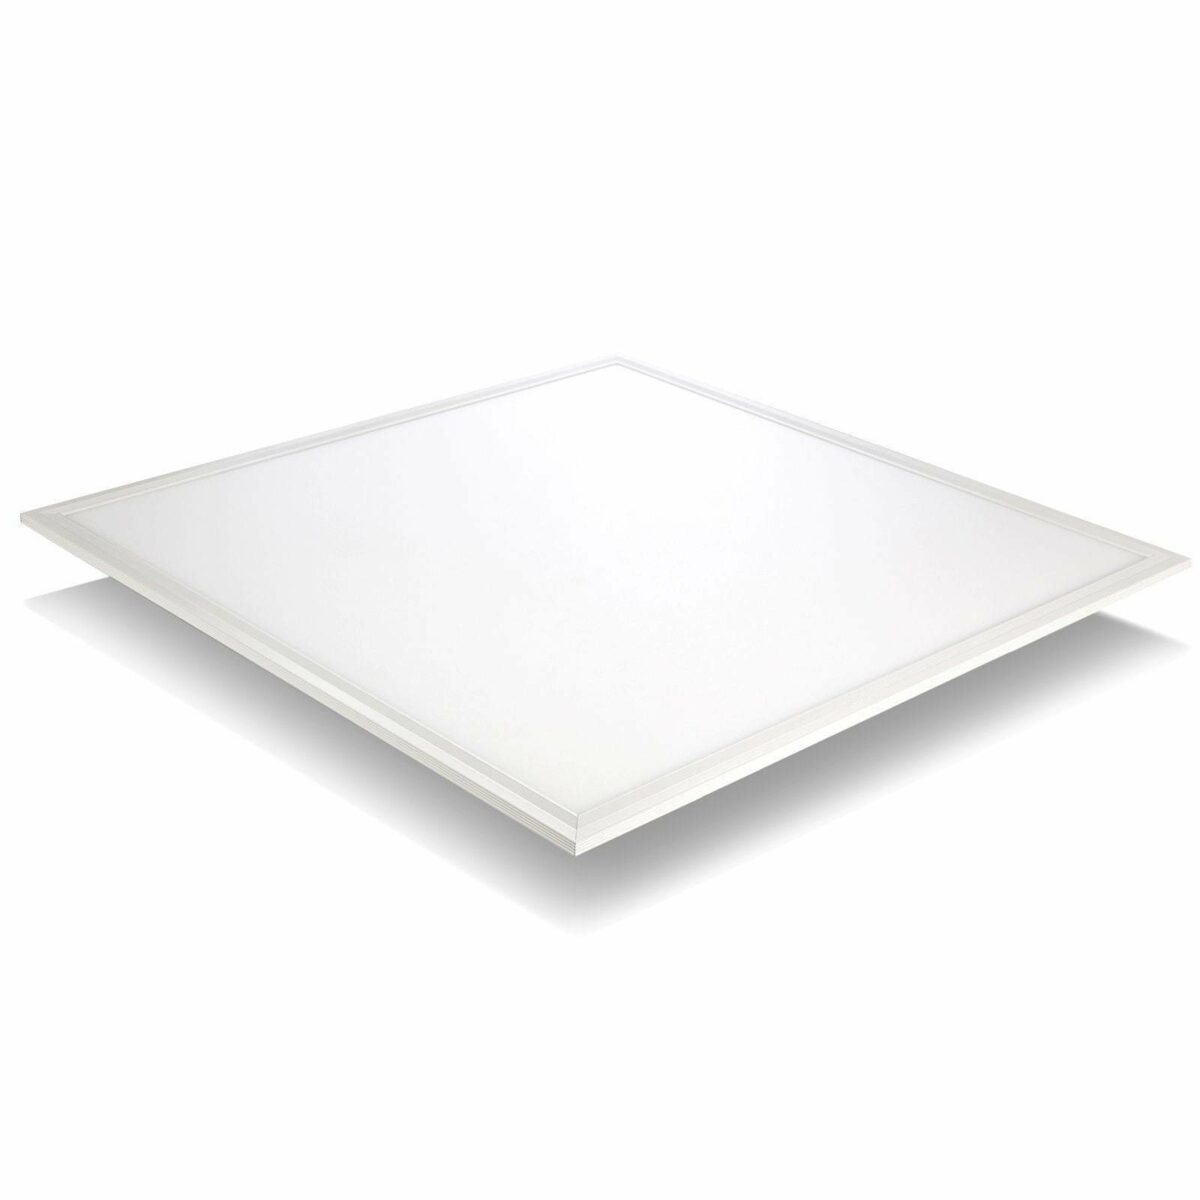 10 x ABIS LED Ceiling Panel - 48W - Natural White - ABIS